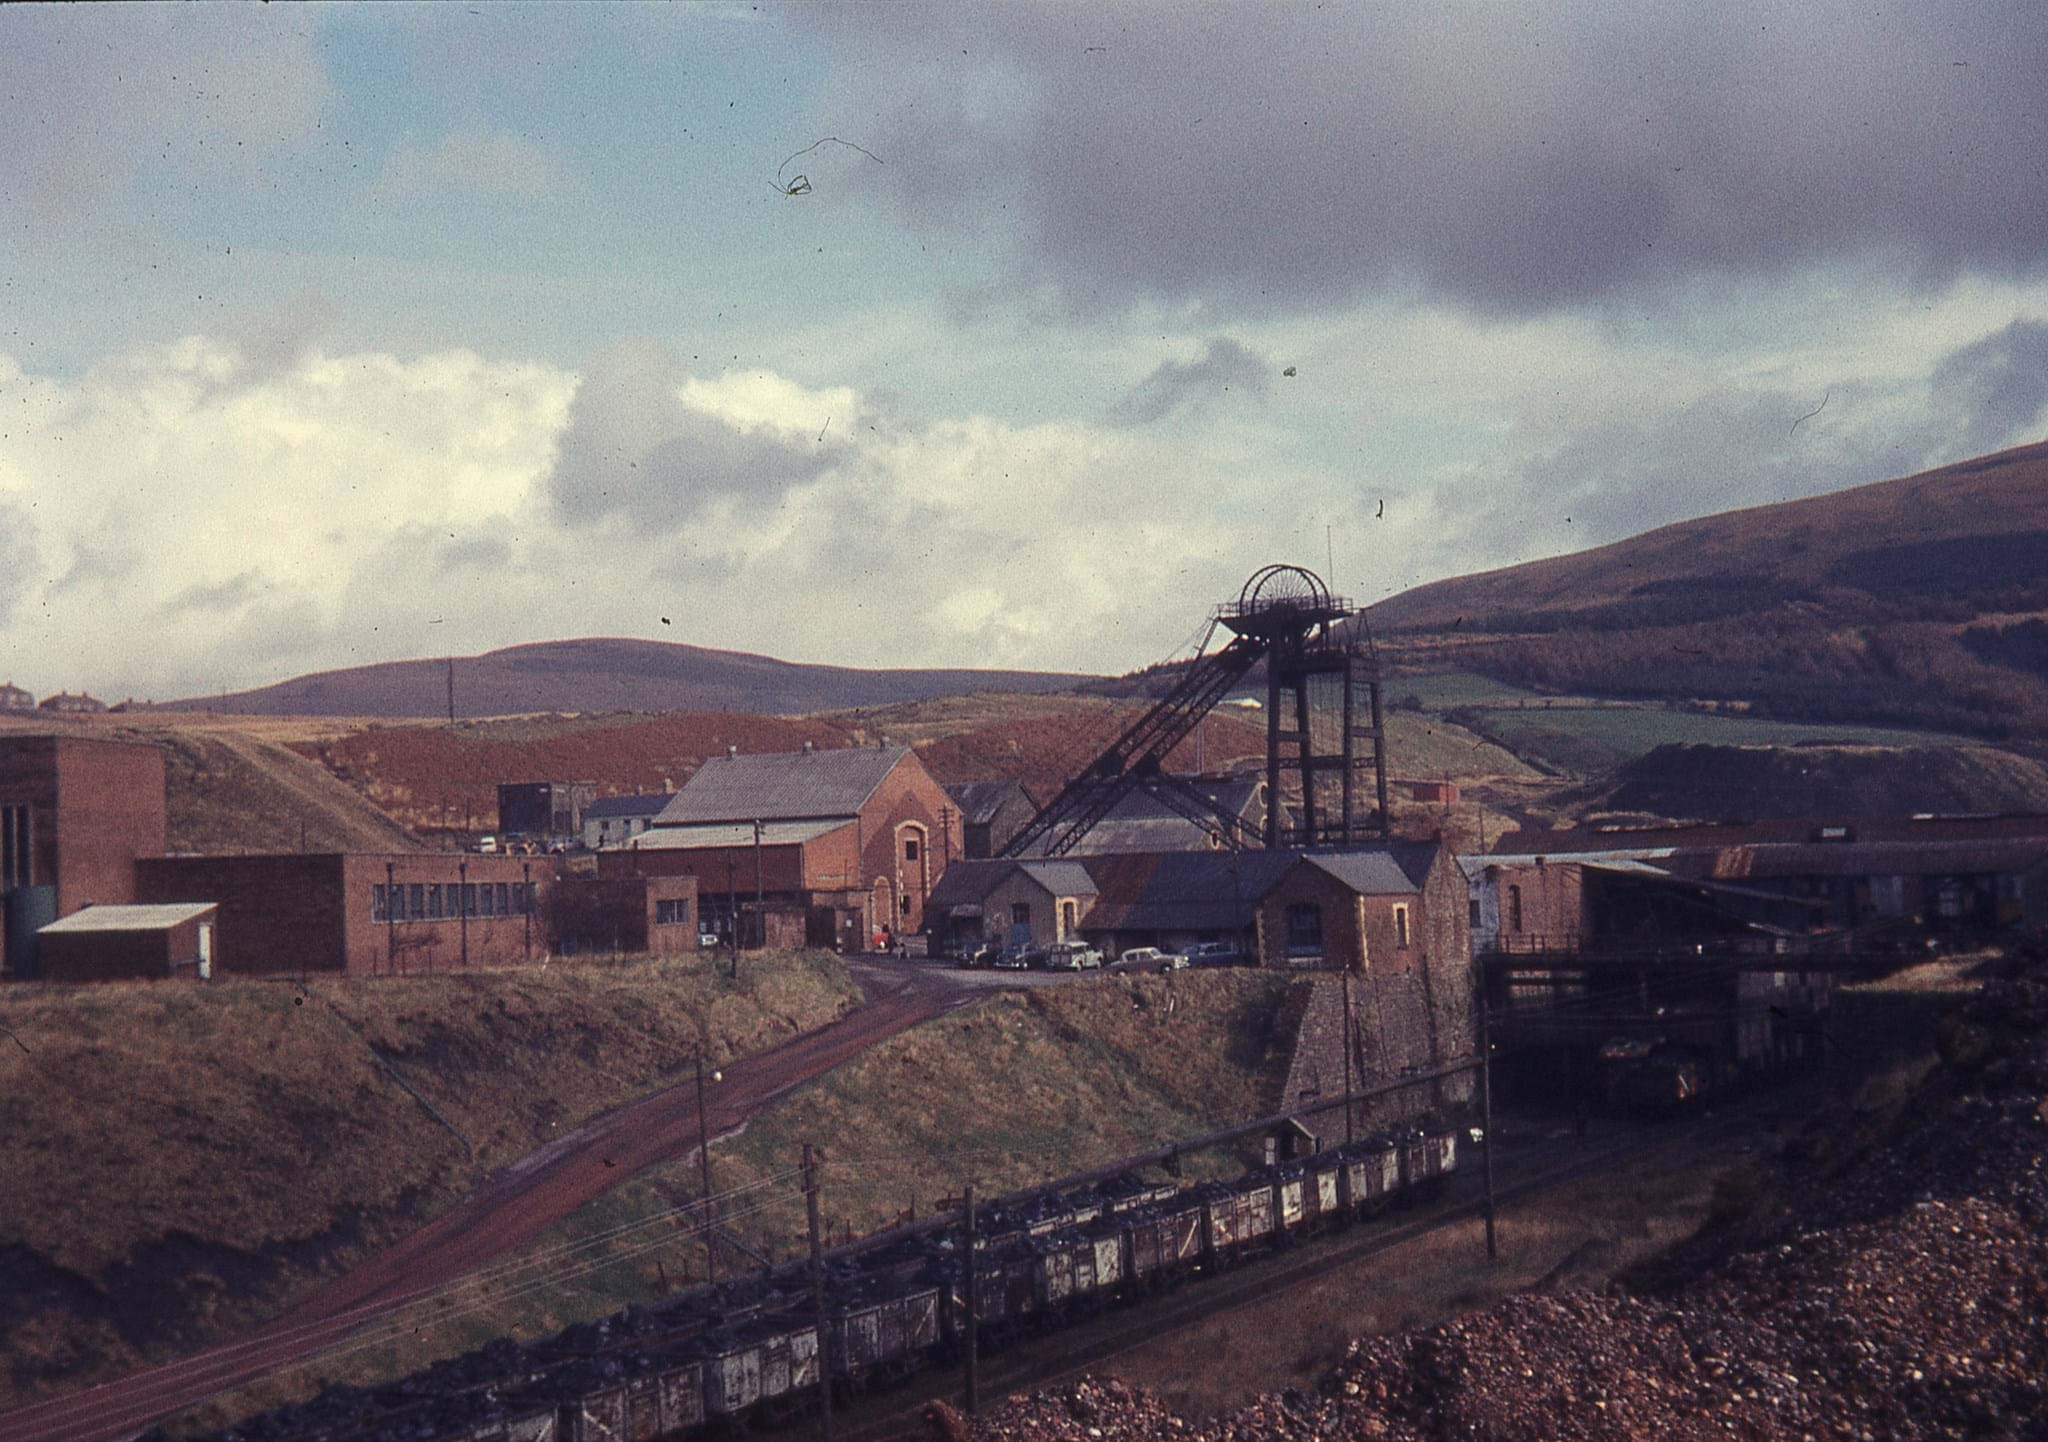 Caerau Colliery pre-closure